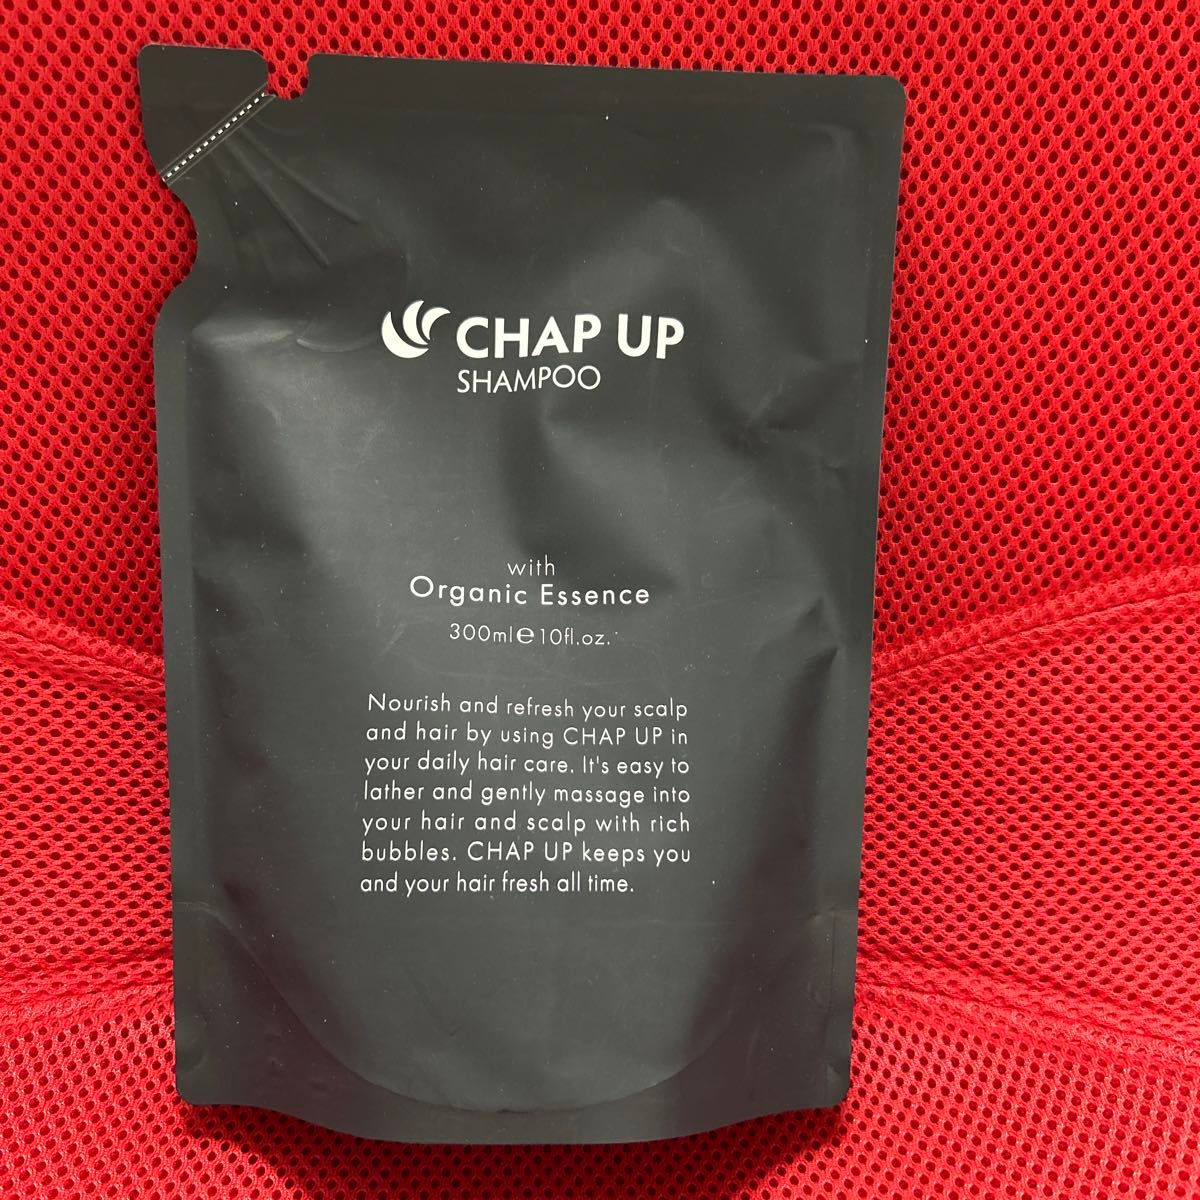 CHAP UP 薬用チャップアップ-04 育毛ローション&シャンプーセット